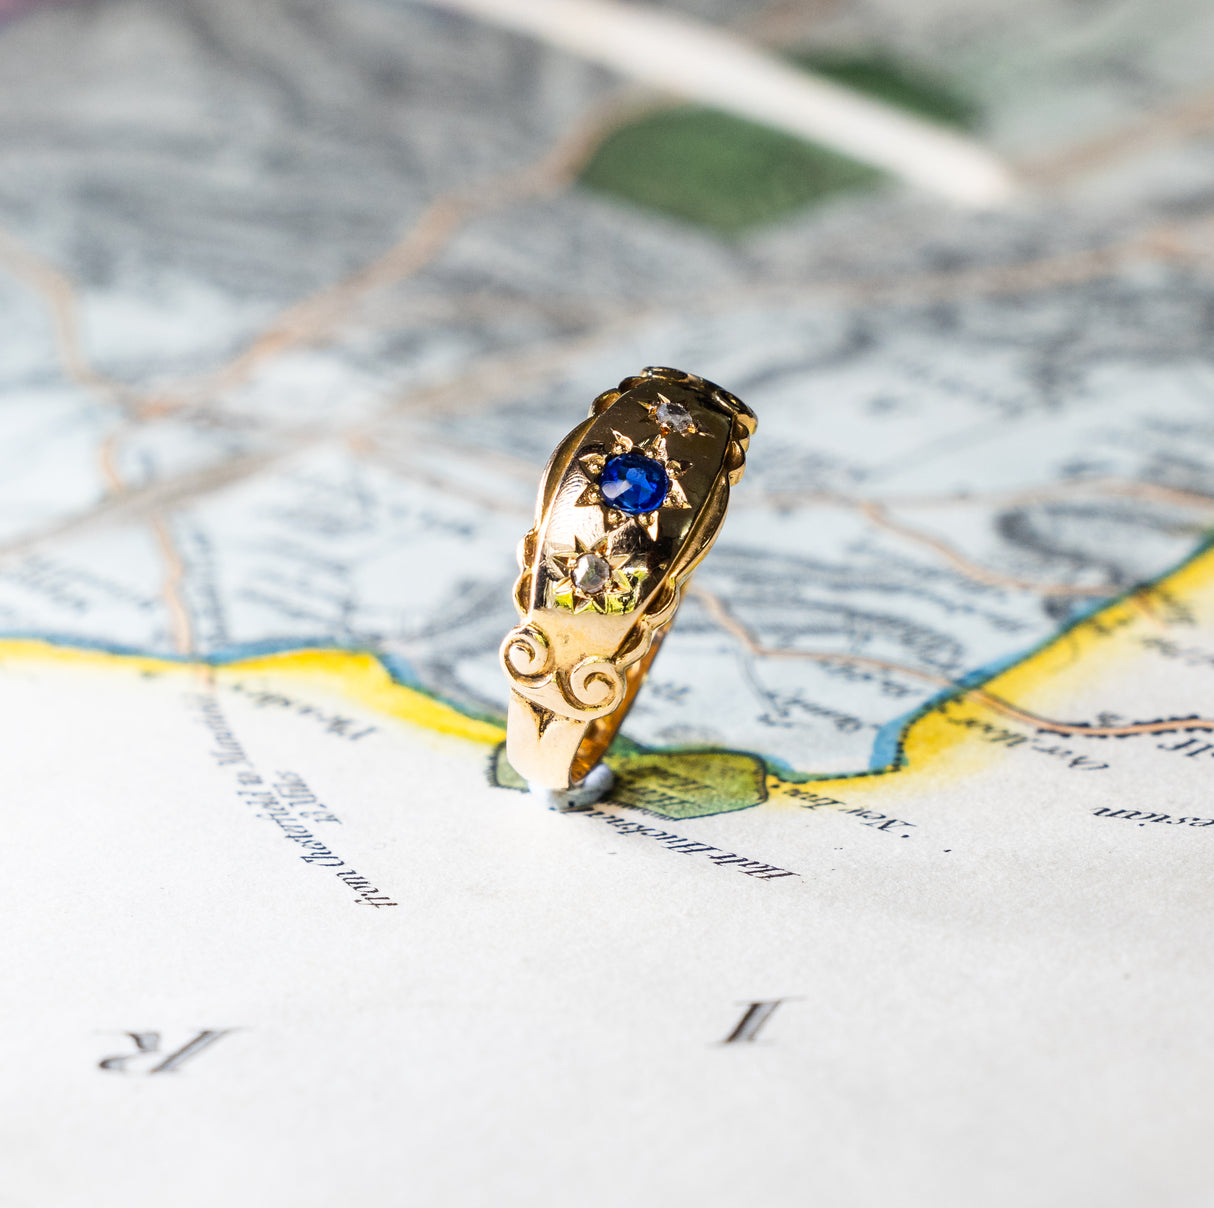 Antique, Edwardian sapphire and diamond three-stone gypsy ring, 18ct yellow gold